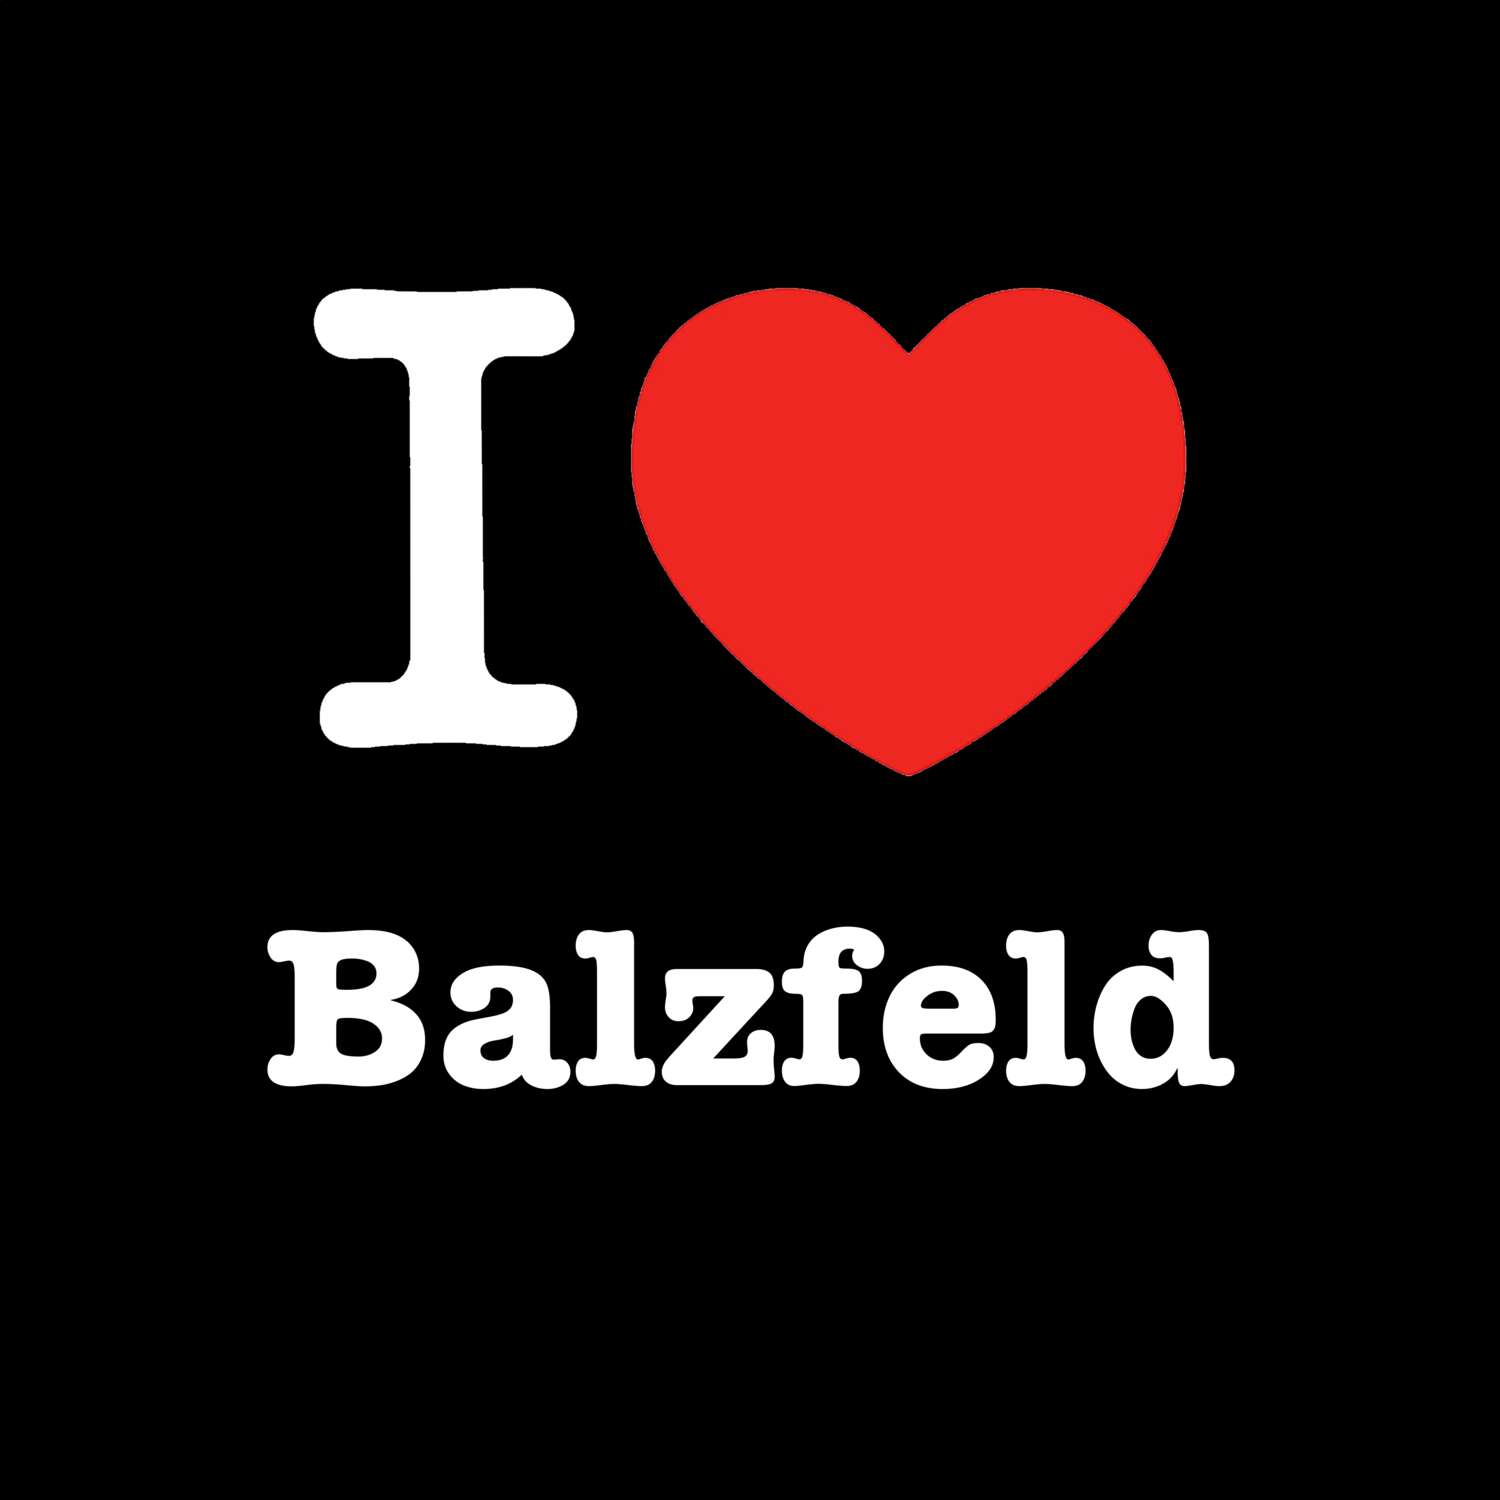 Balzfeld T-Shirt »I love«